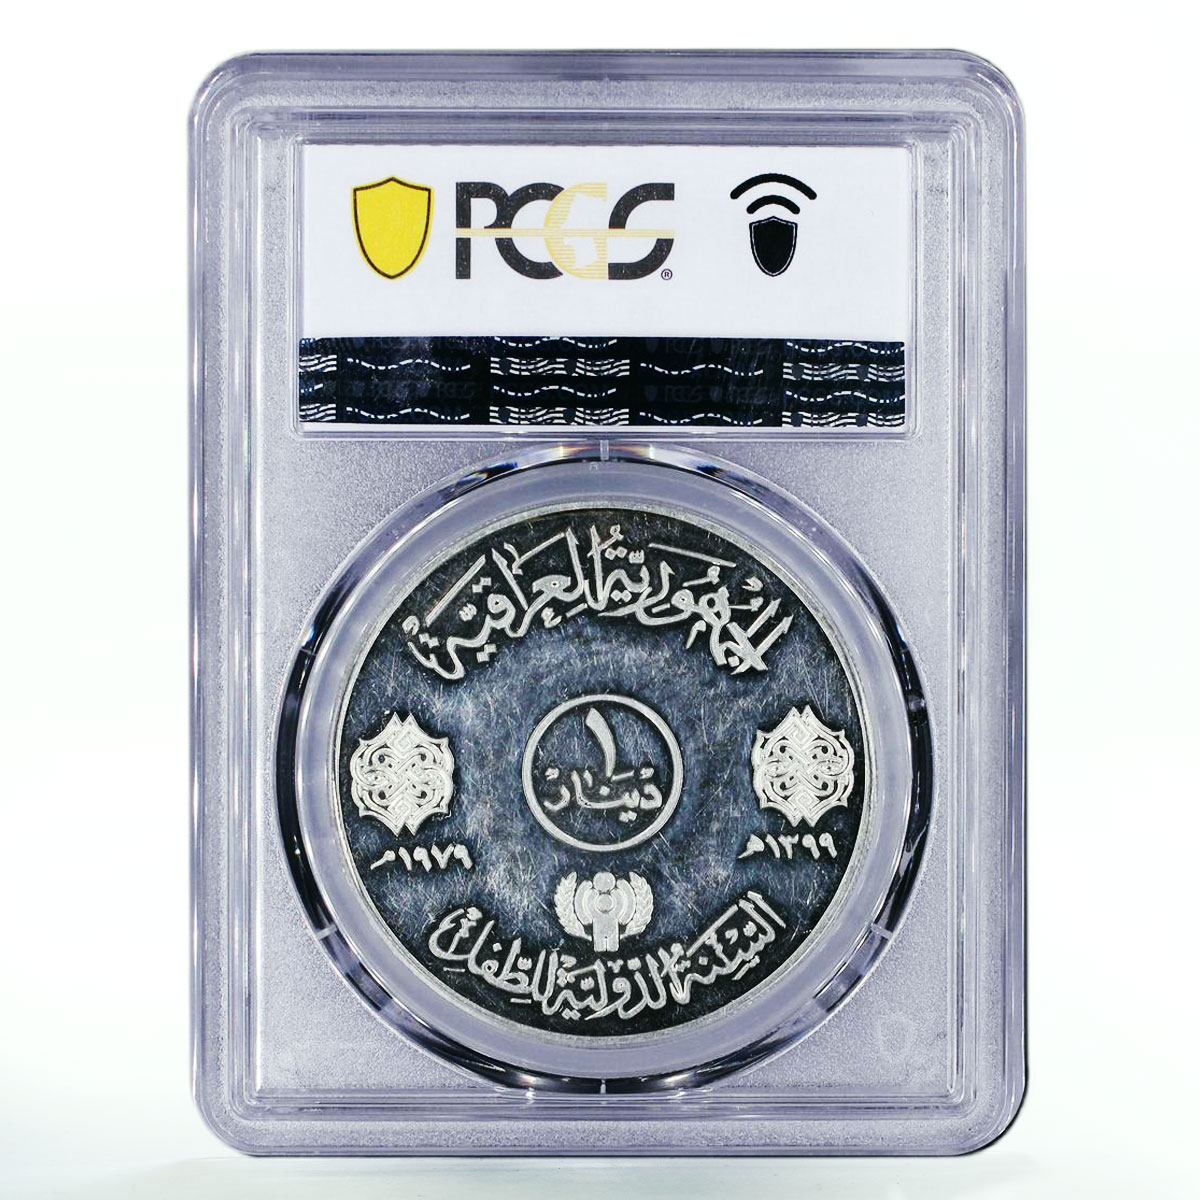 Iraq 1 dinar International Year of Child PR62 PCGS proof silver coin 1979